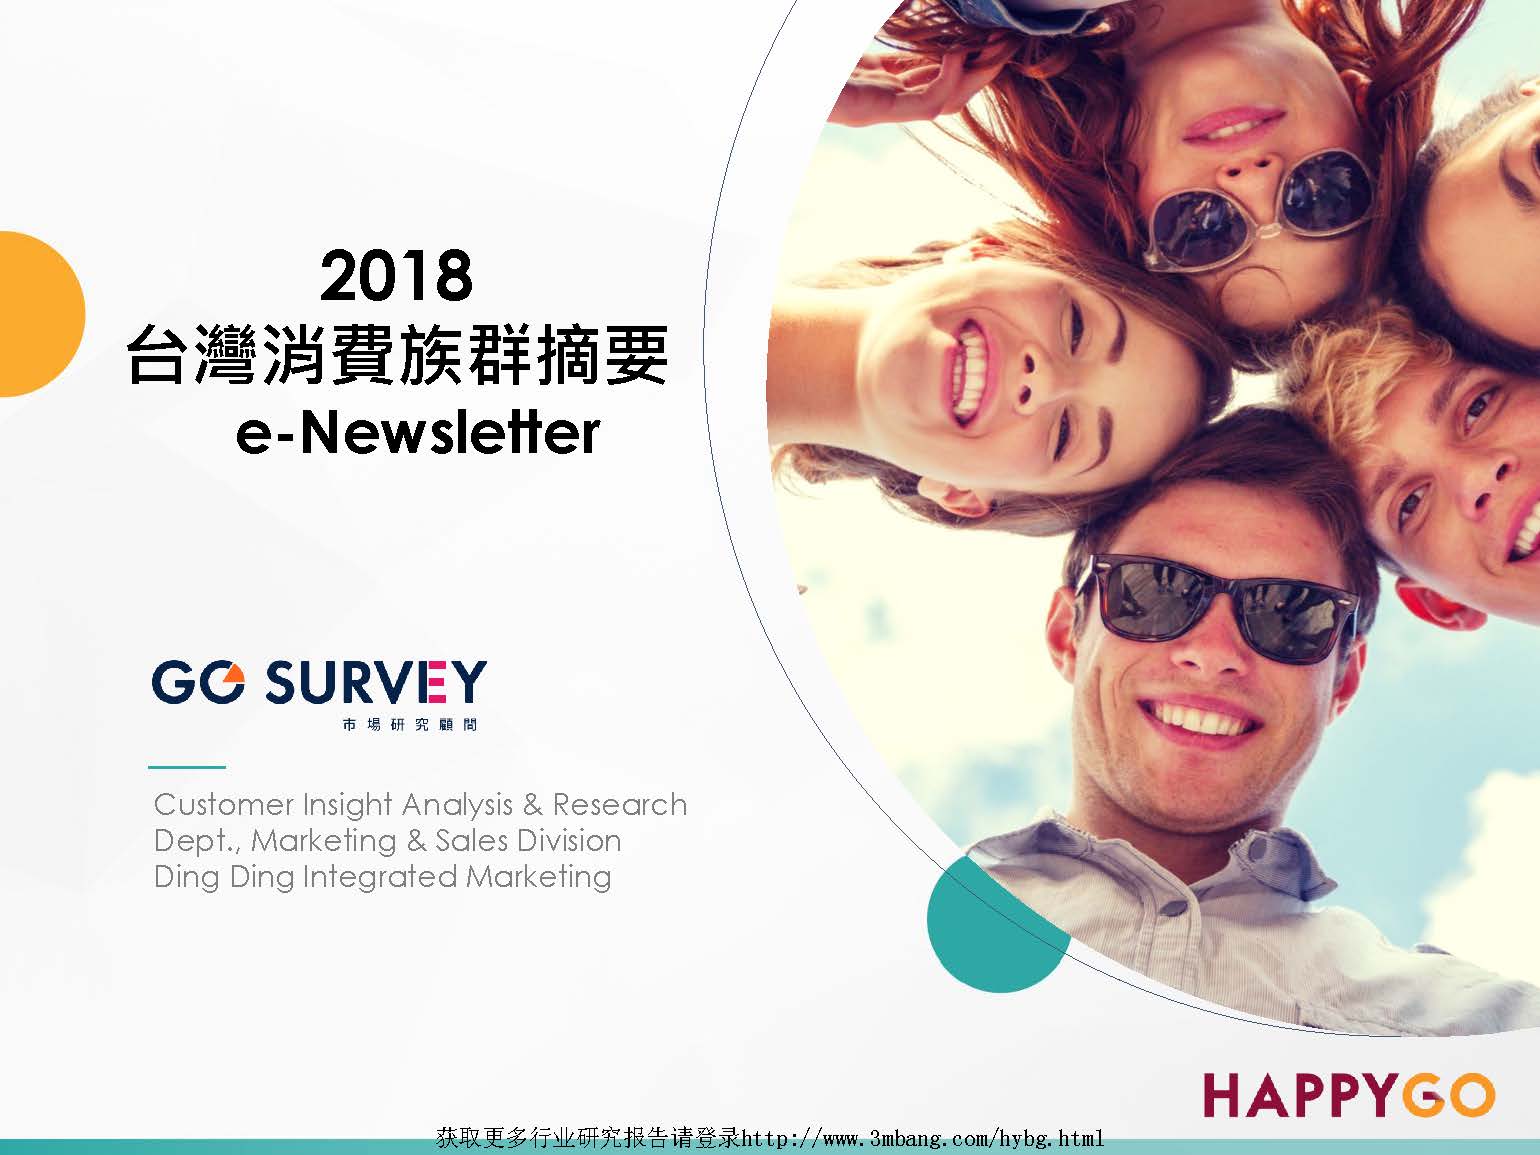 GO SURVEY：2018年台湾消费族群摘要(附下载地址)